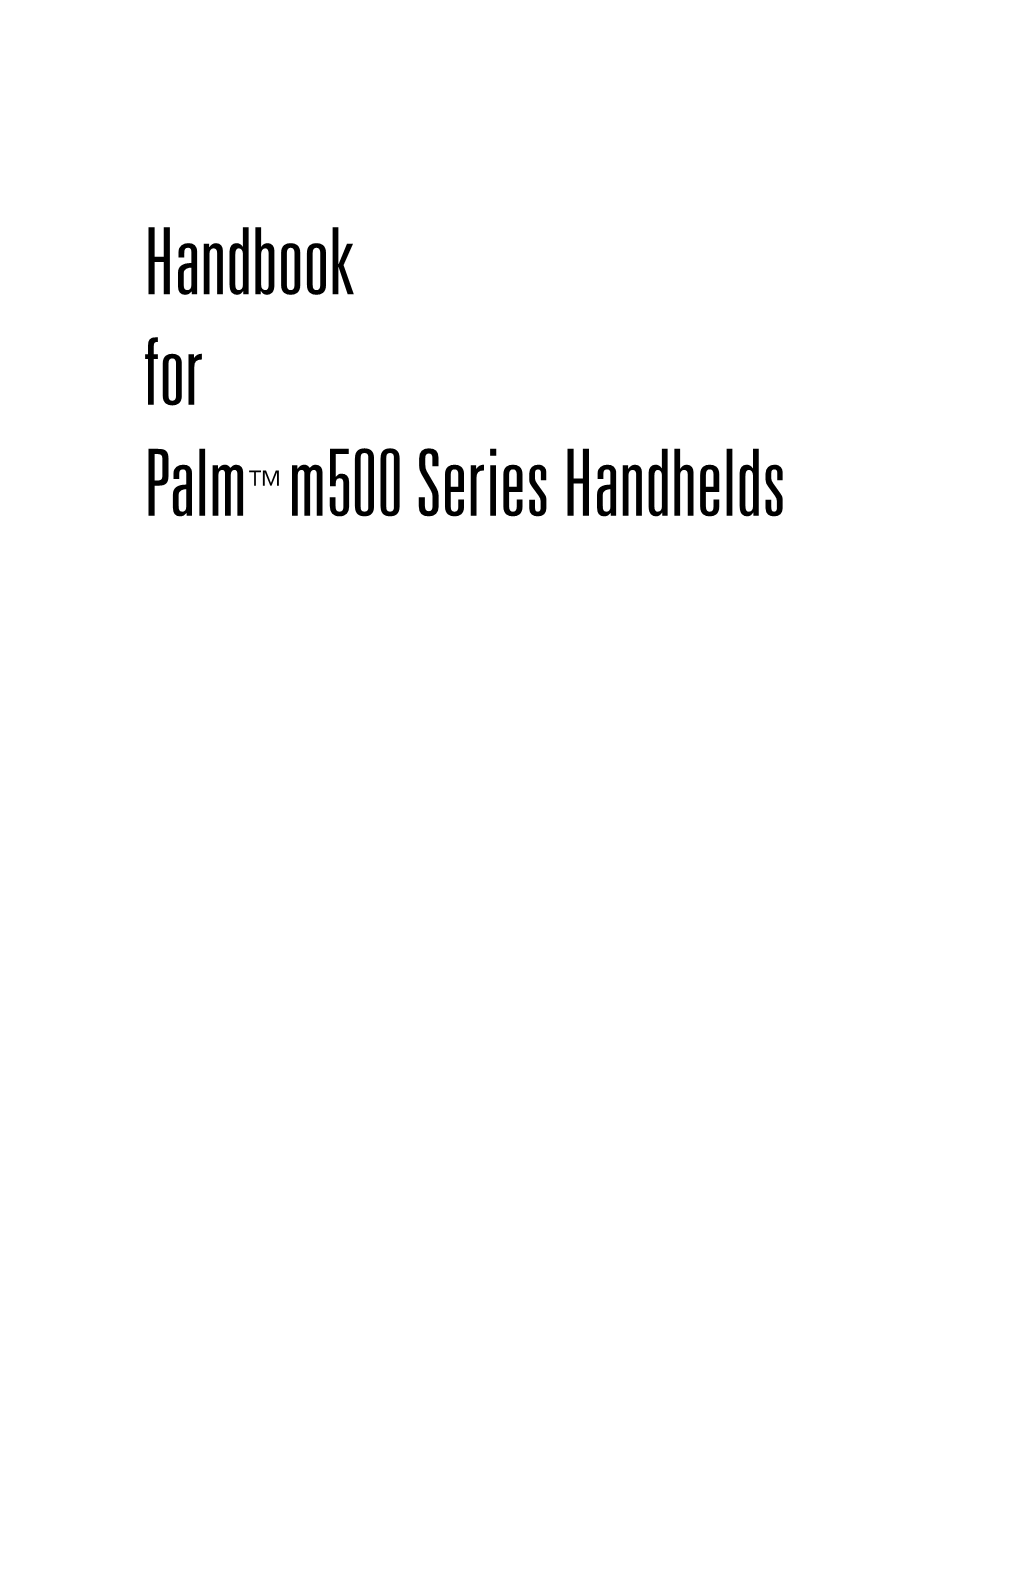 Handbook for Palm™ M500 Series Handhelds Page Ii Handbook for Palm™ M500 Series Handhelds Copyright